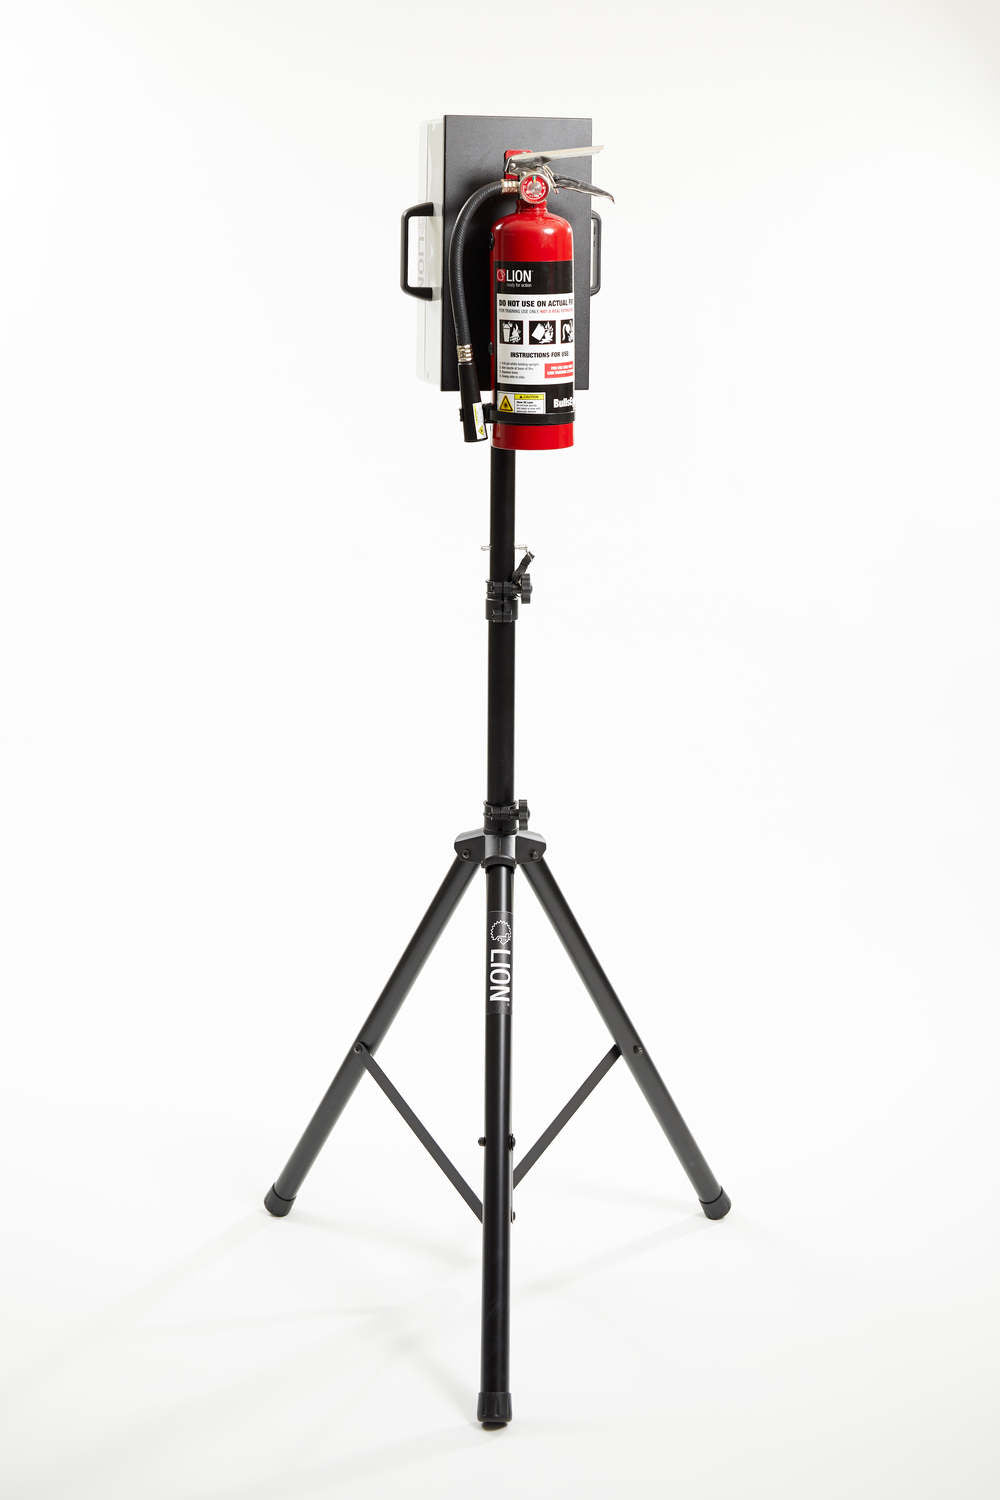 BullsEye Digital Fire Extinguisher Training System ‐ Ultimate Package